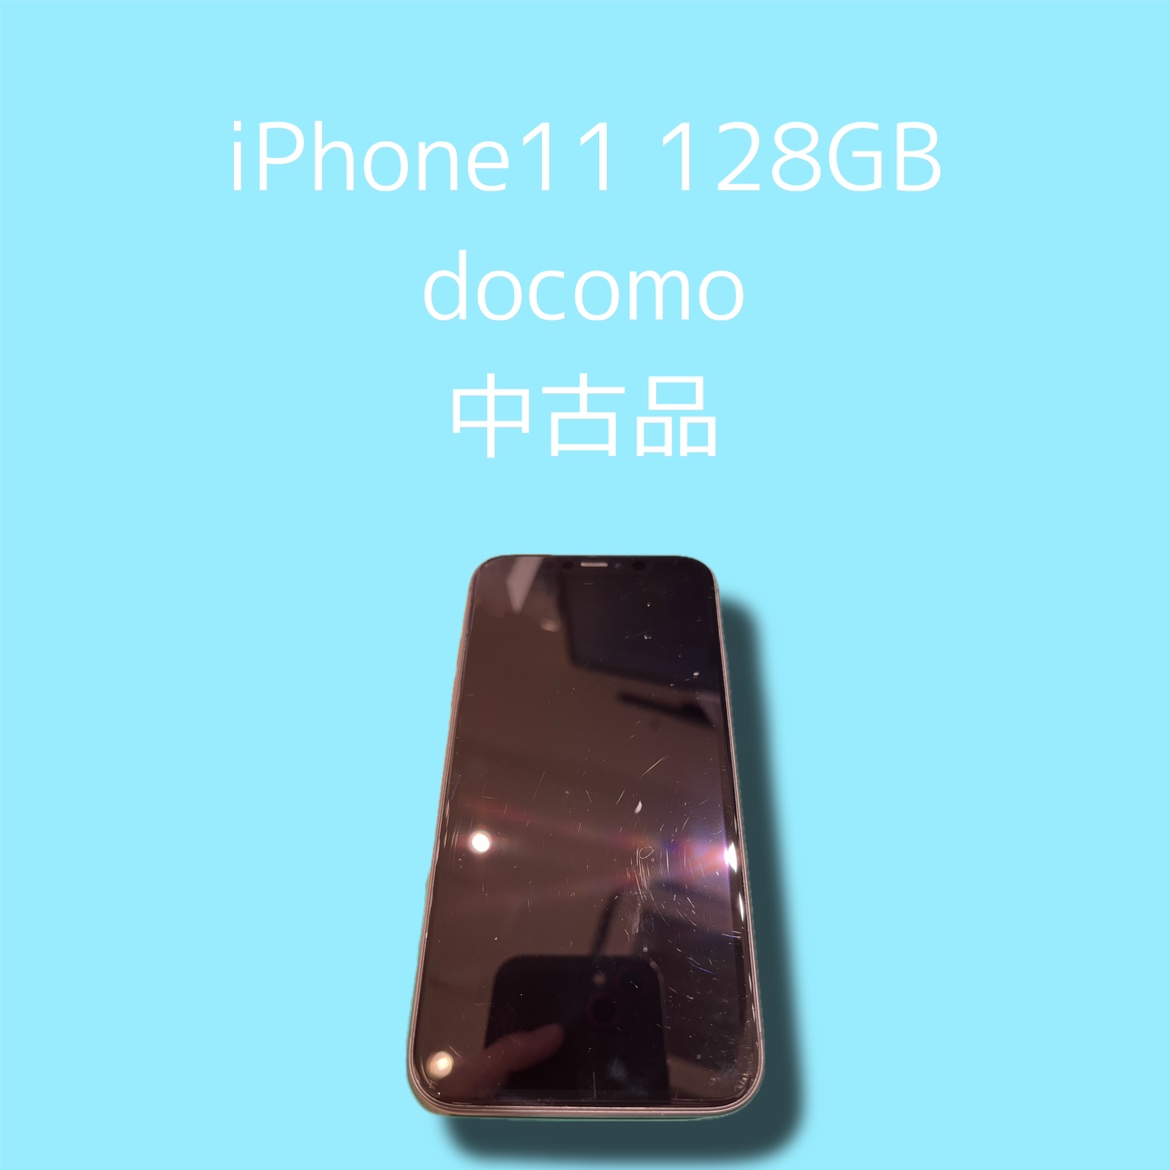 iPhone11・128GB・docomo・〇【天神地下街店】